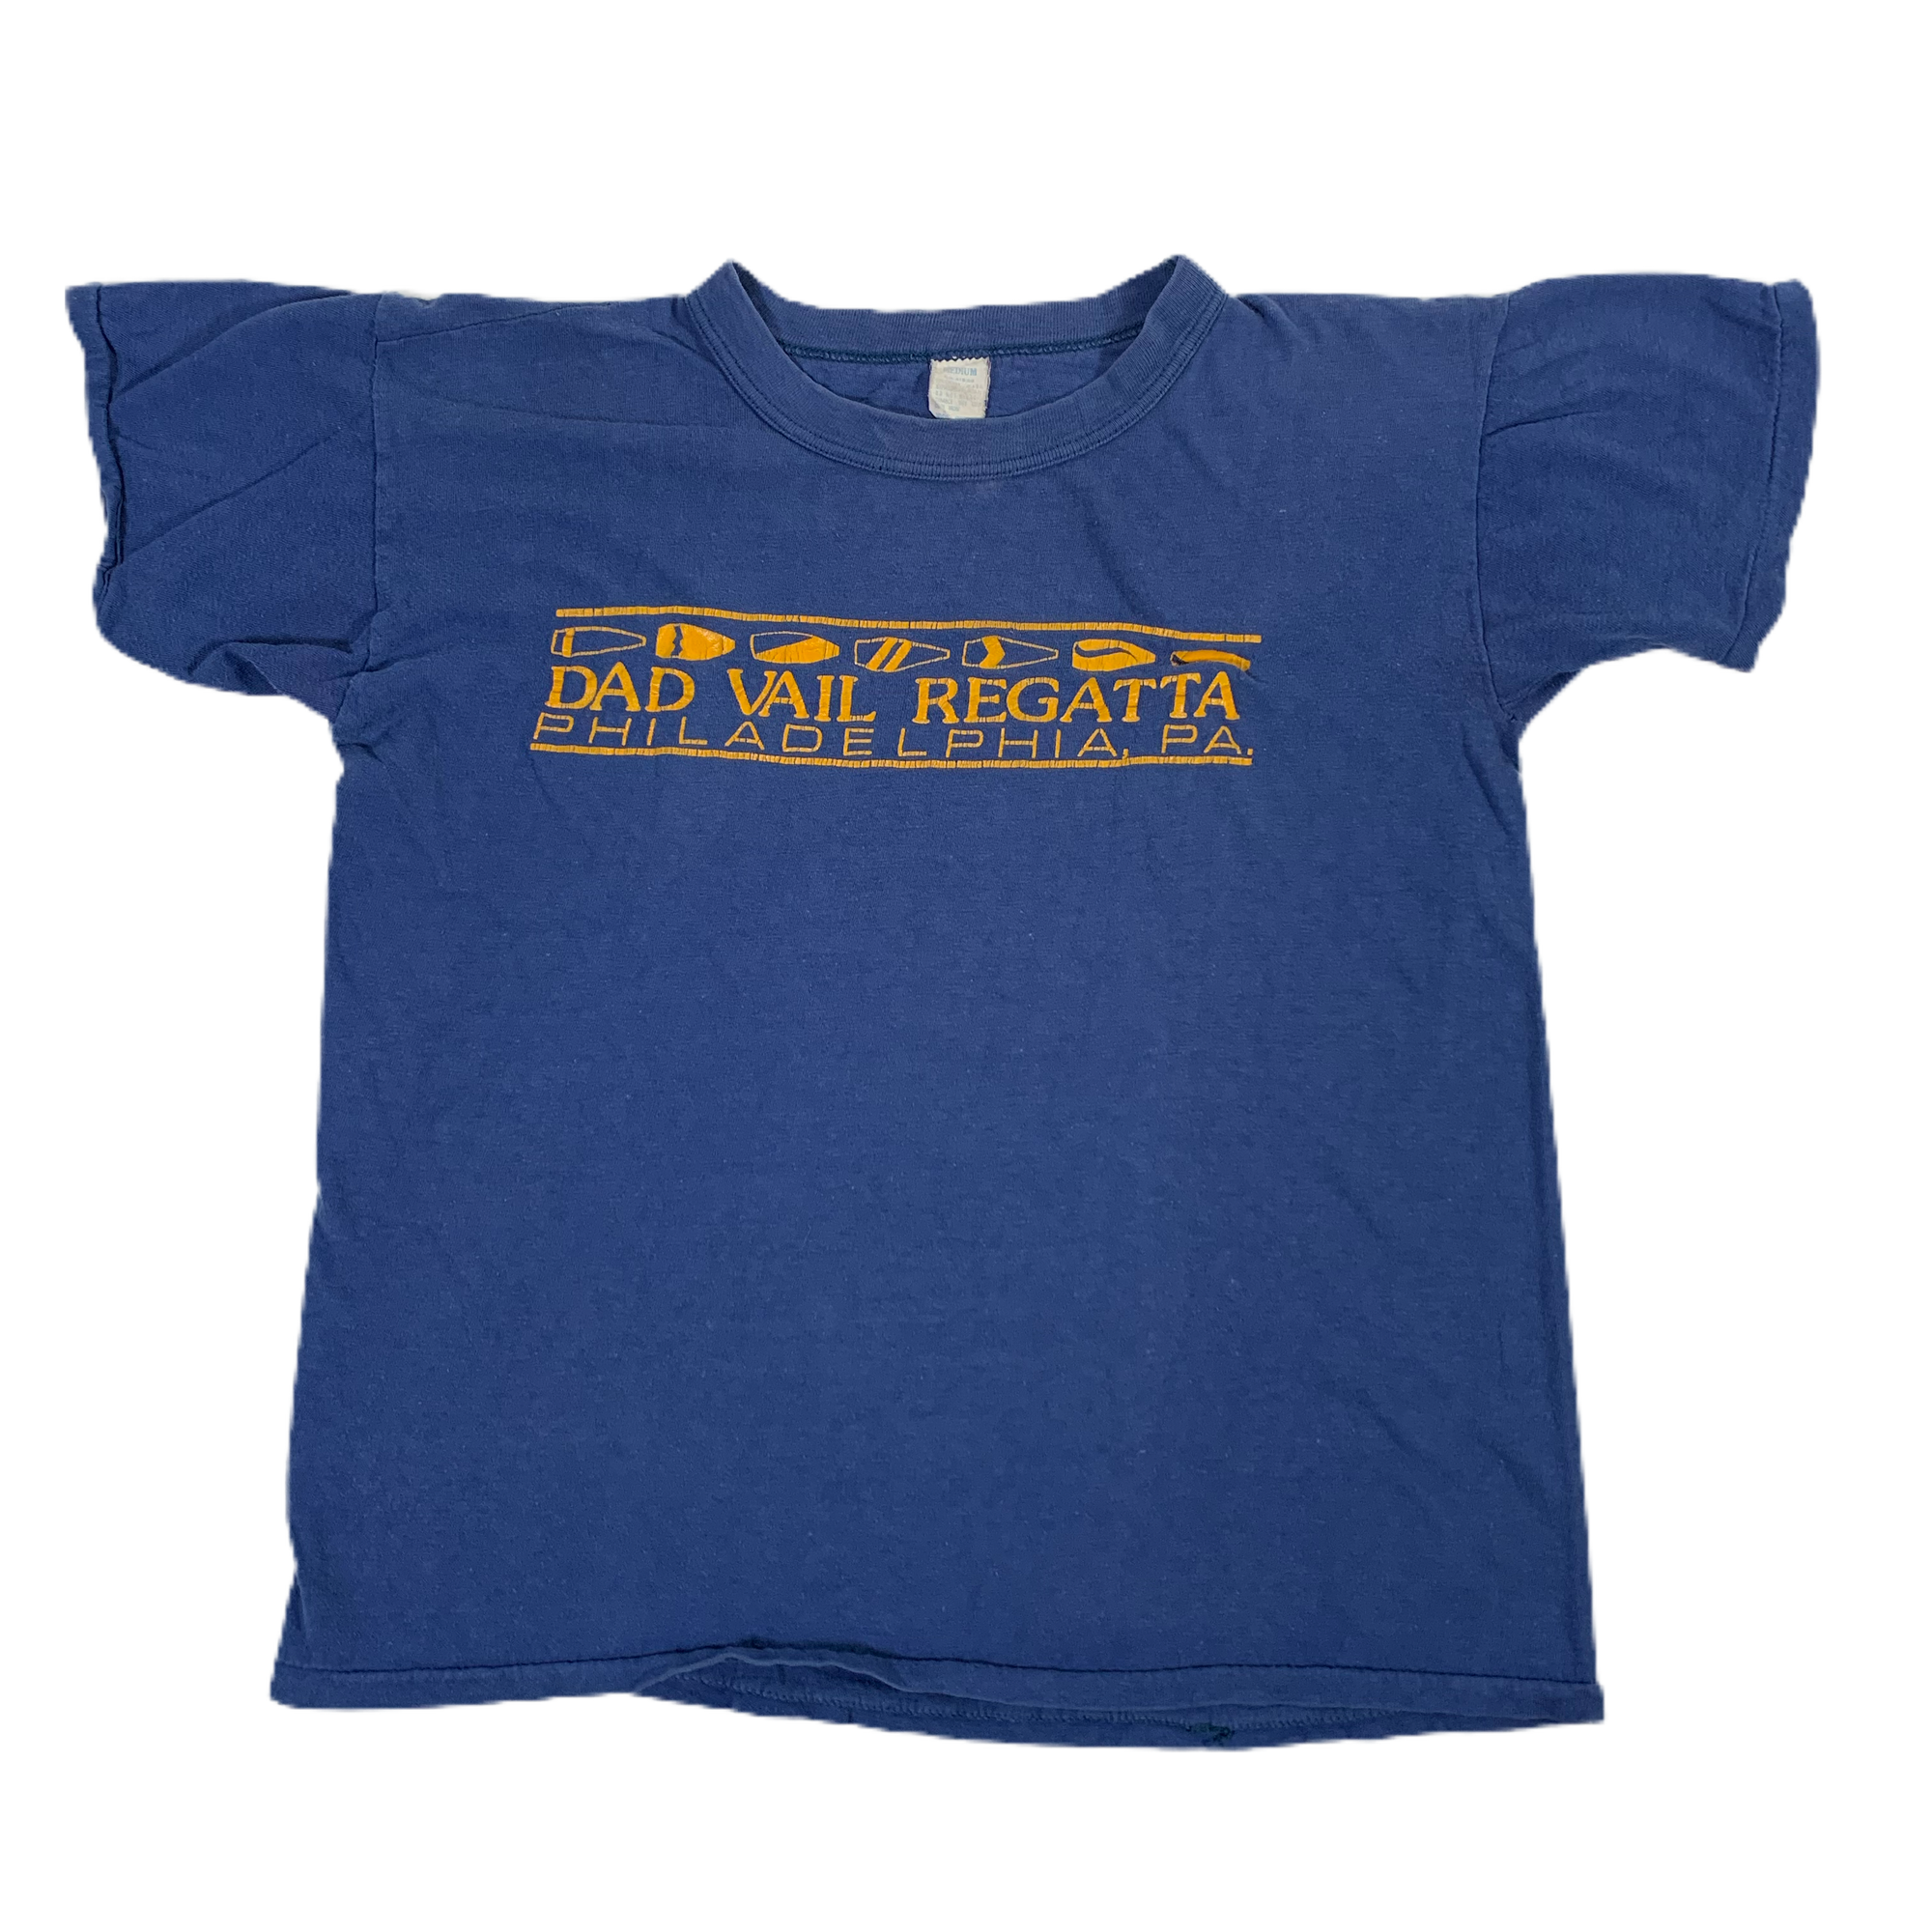 Vintage Philadelphia "Regatta" T-Shirt - jointcustodydc